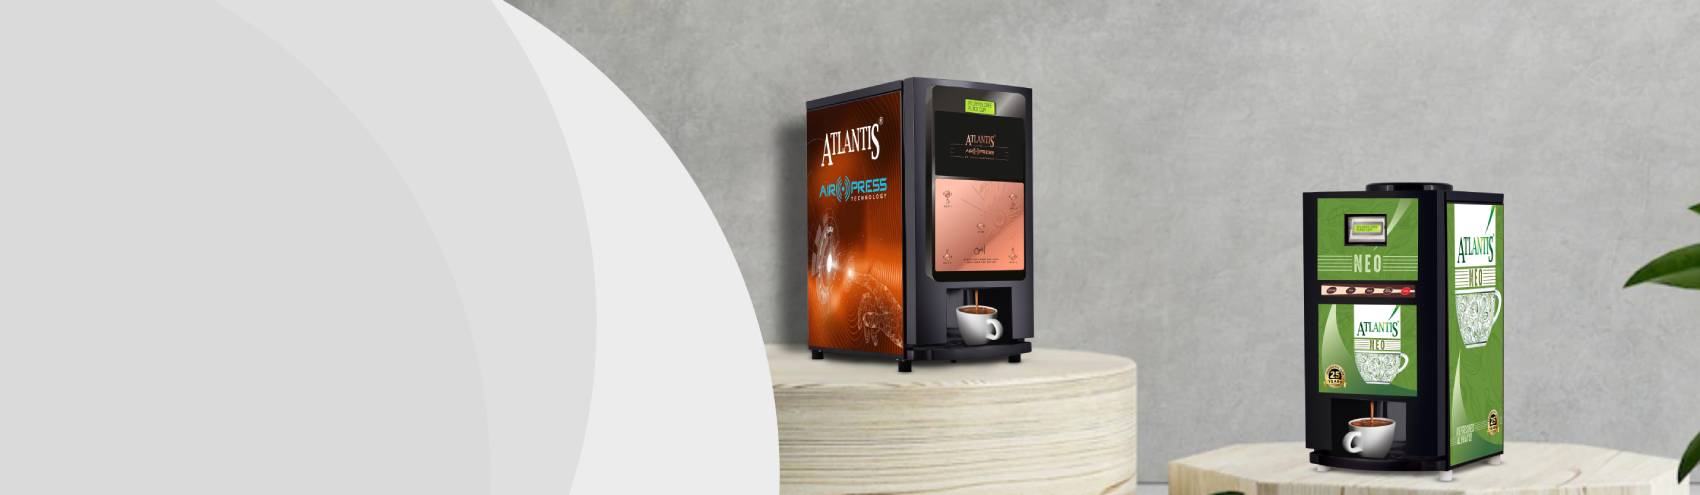 Tea Coffee Vending Machines